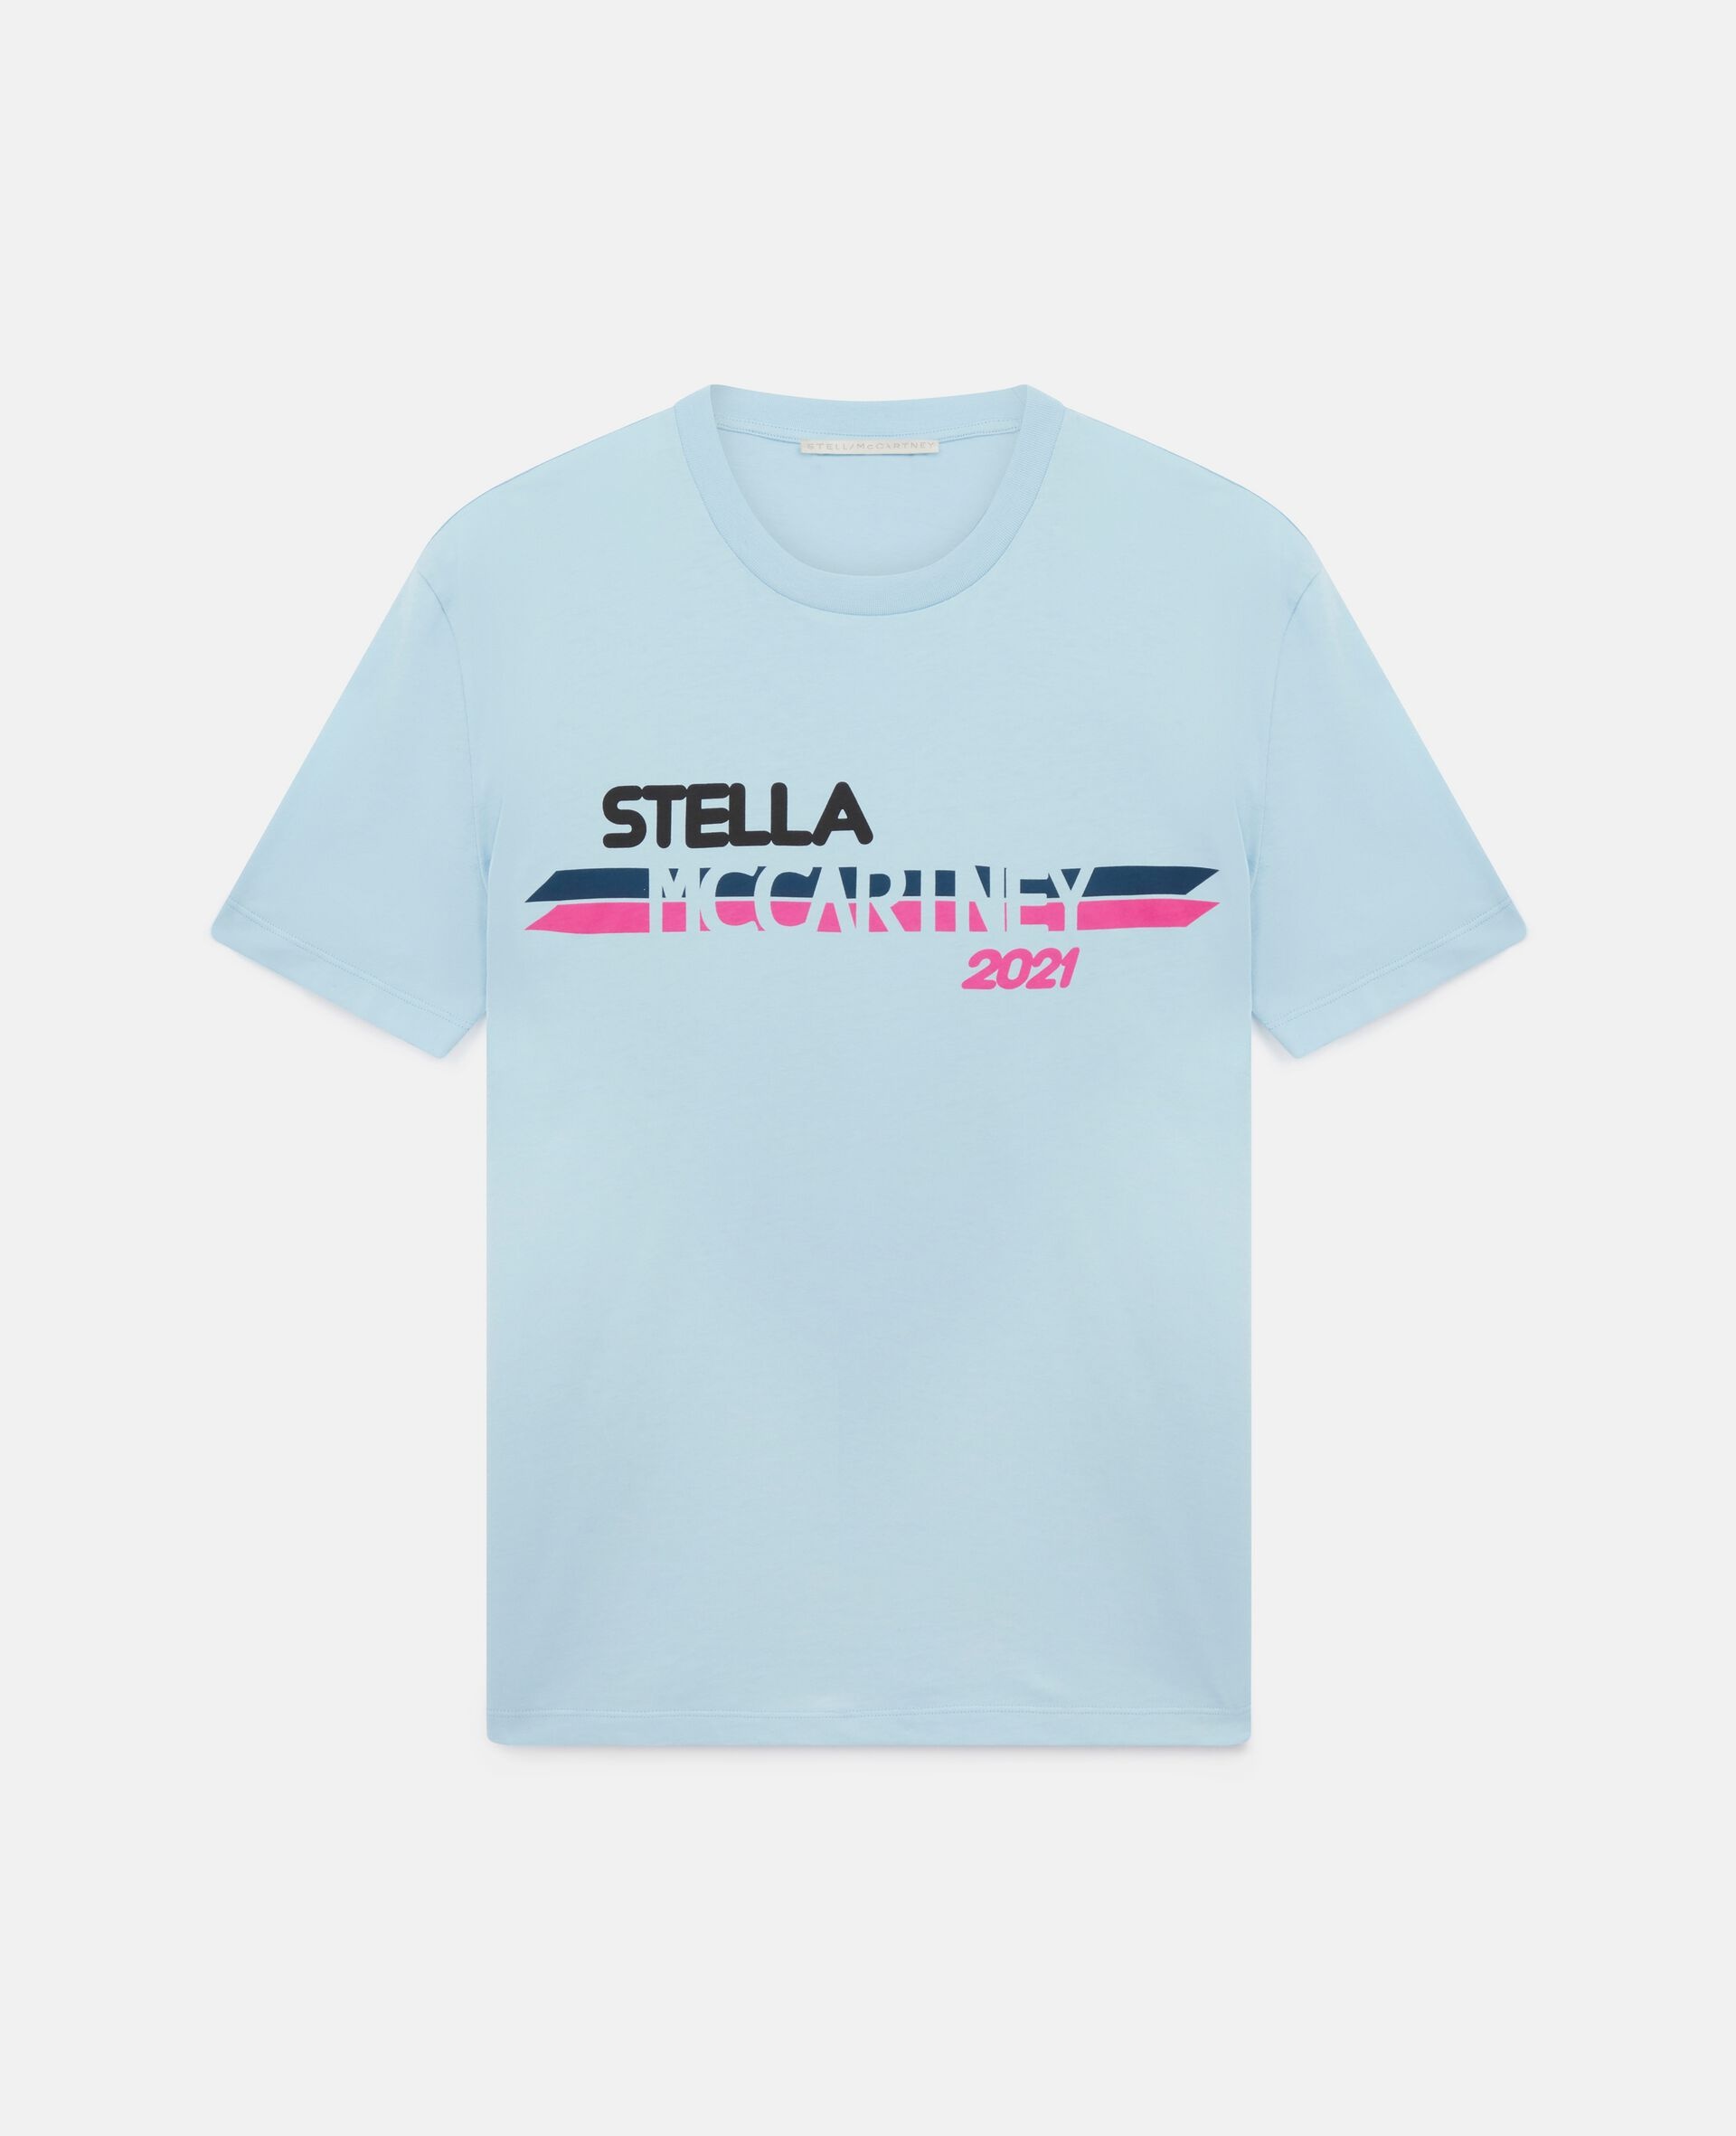 Stella McCartney 2021 Logo T-Shirt - 1